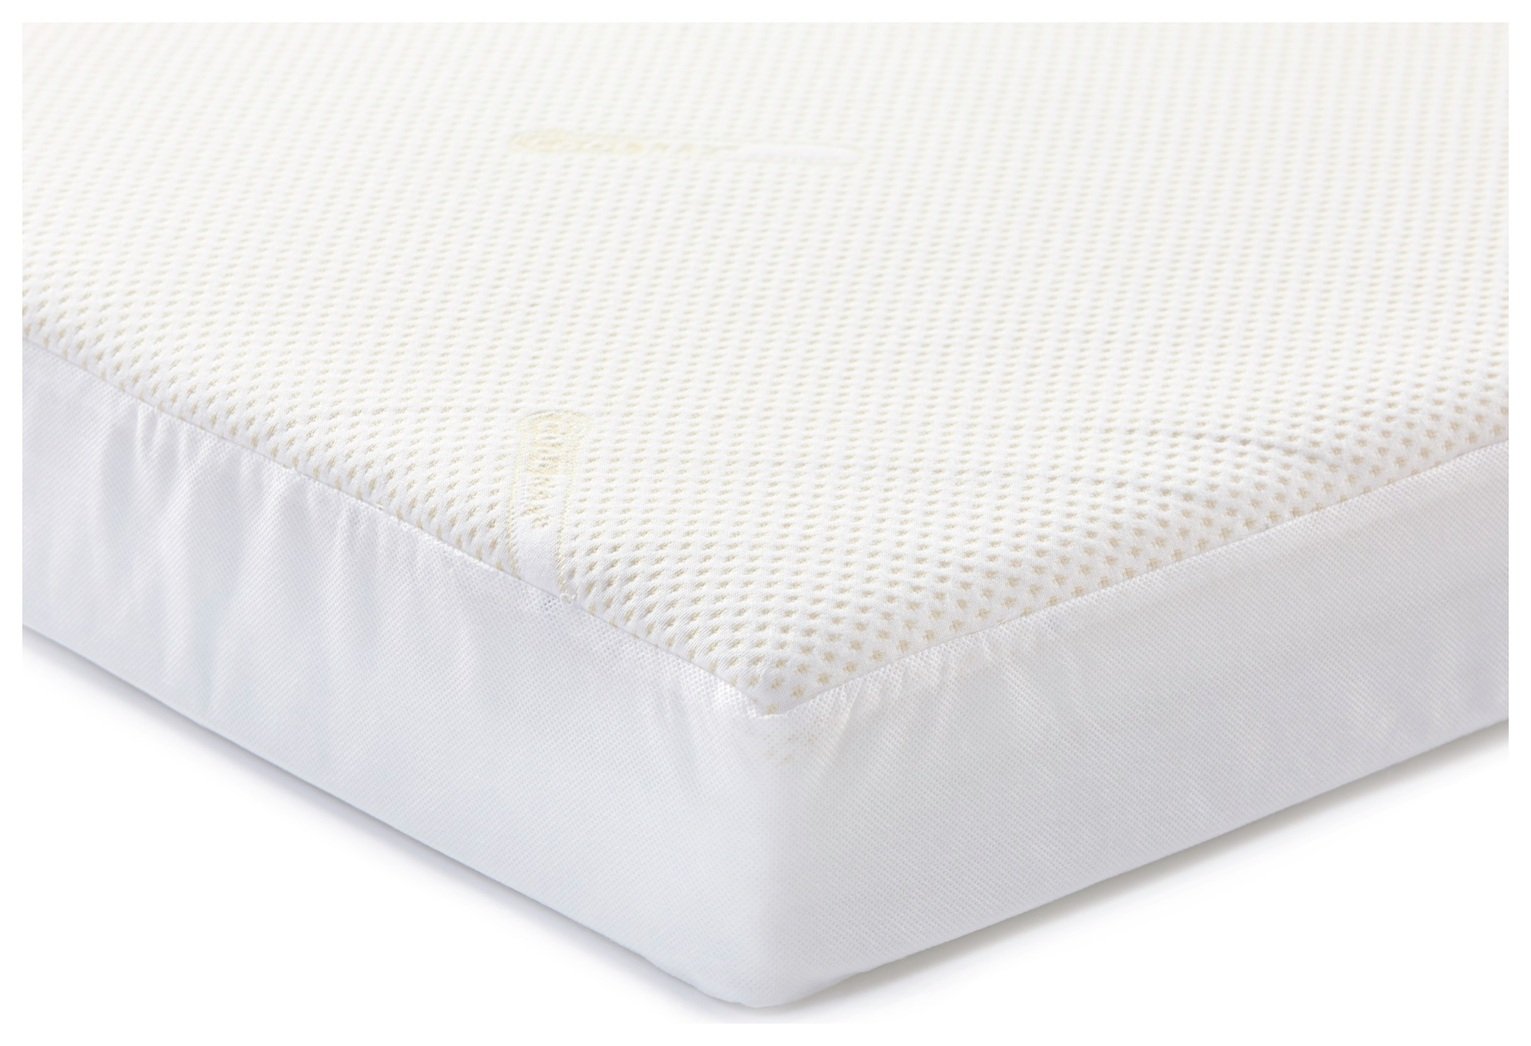 tomy sleepcurve cot bed mattress 70cm x 140cm